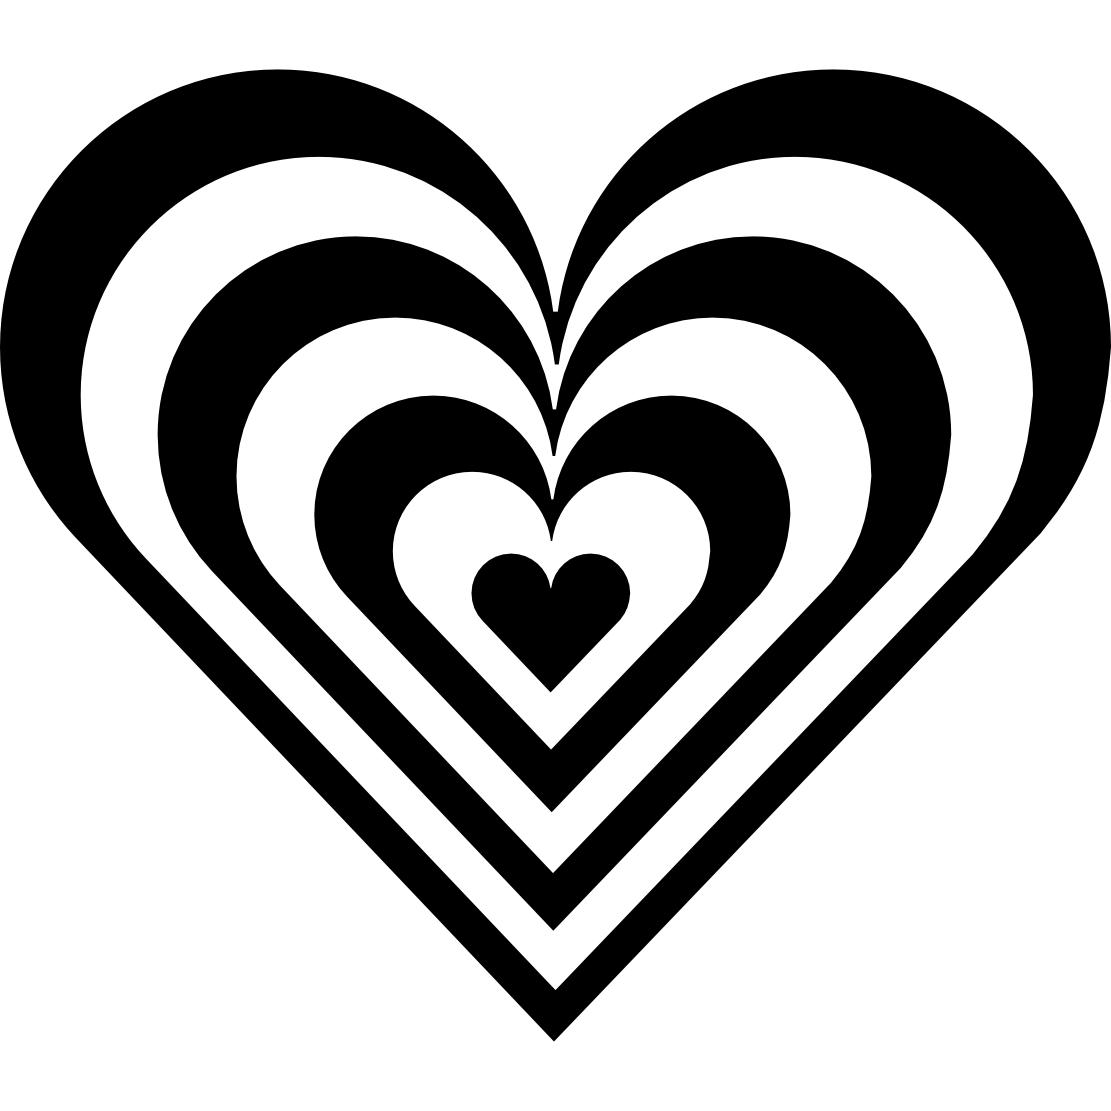 heart border clipart black and white